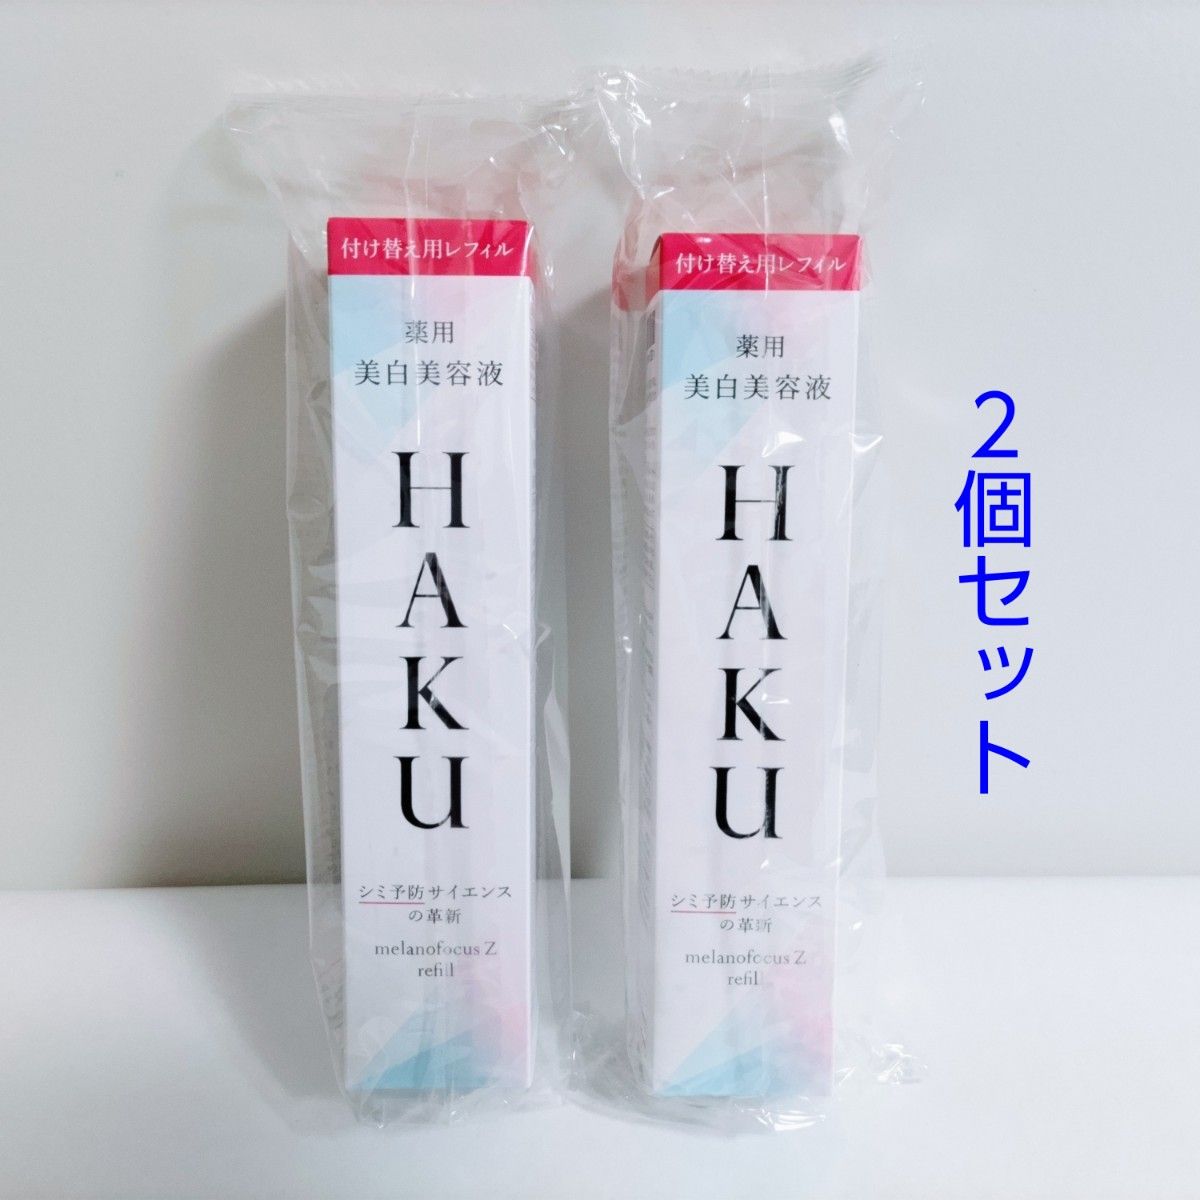 HAKU メラノフォーカスZ 美白美容液 付け替え用レフィル 45g 2個セット